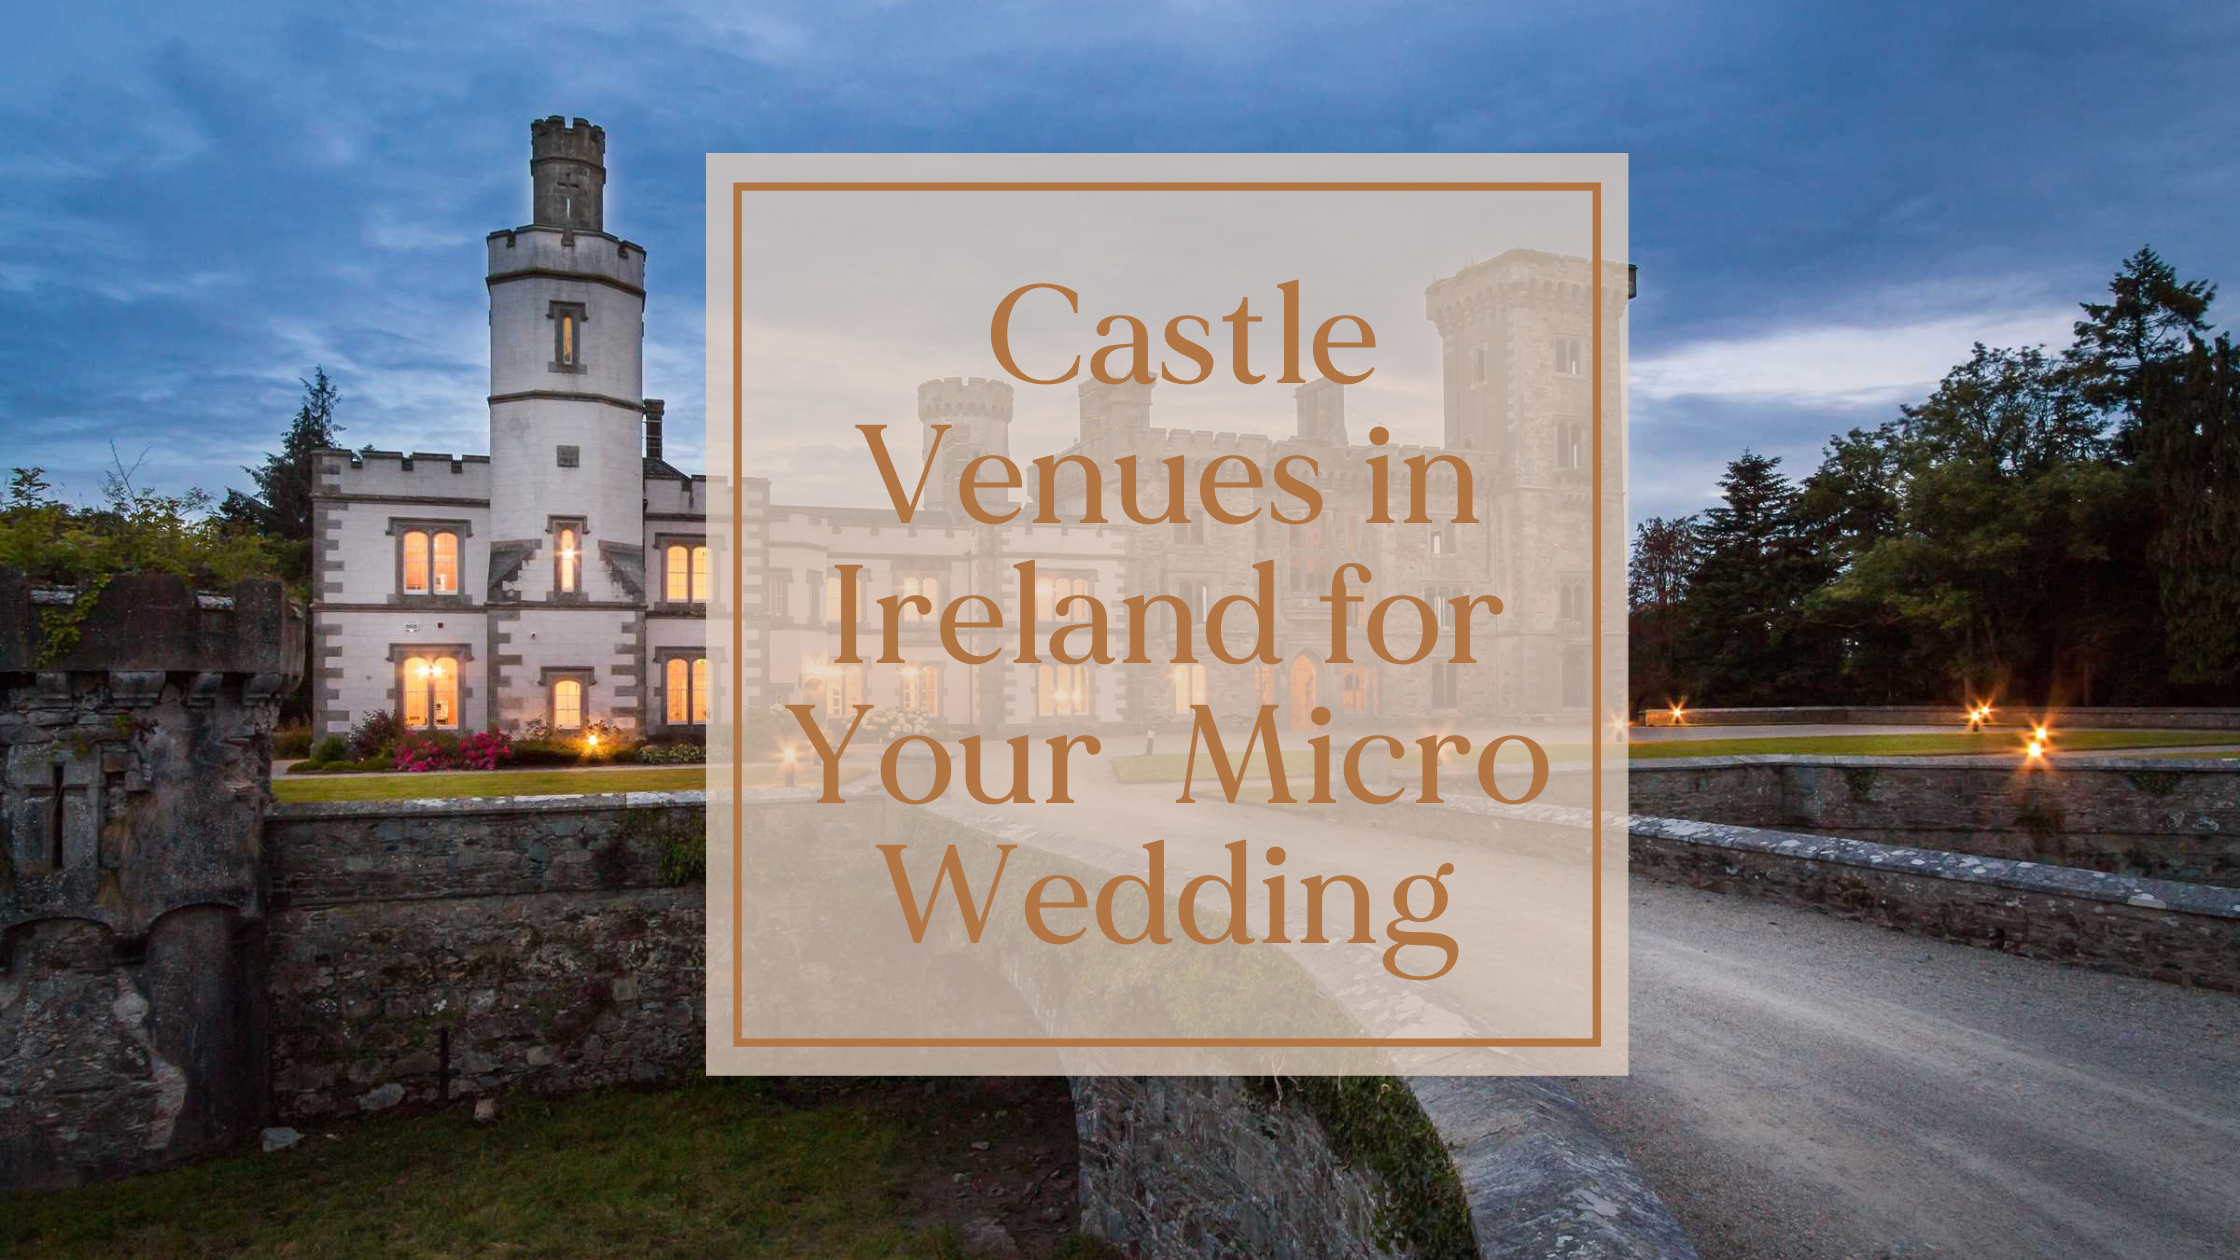 Wilton Castle as a top wedding castle venue for microweddings